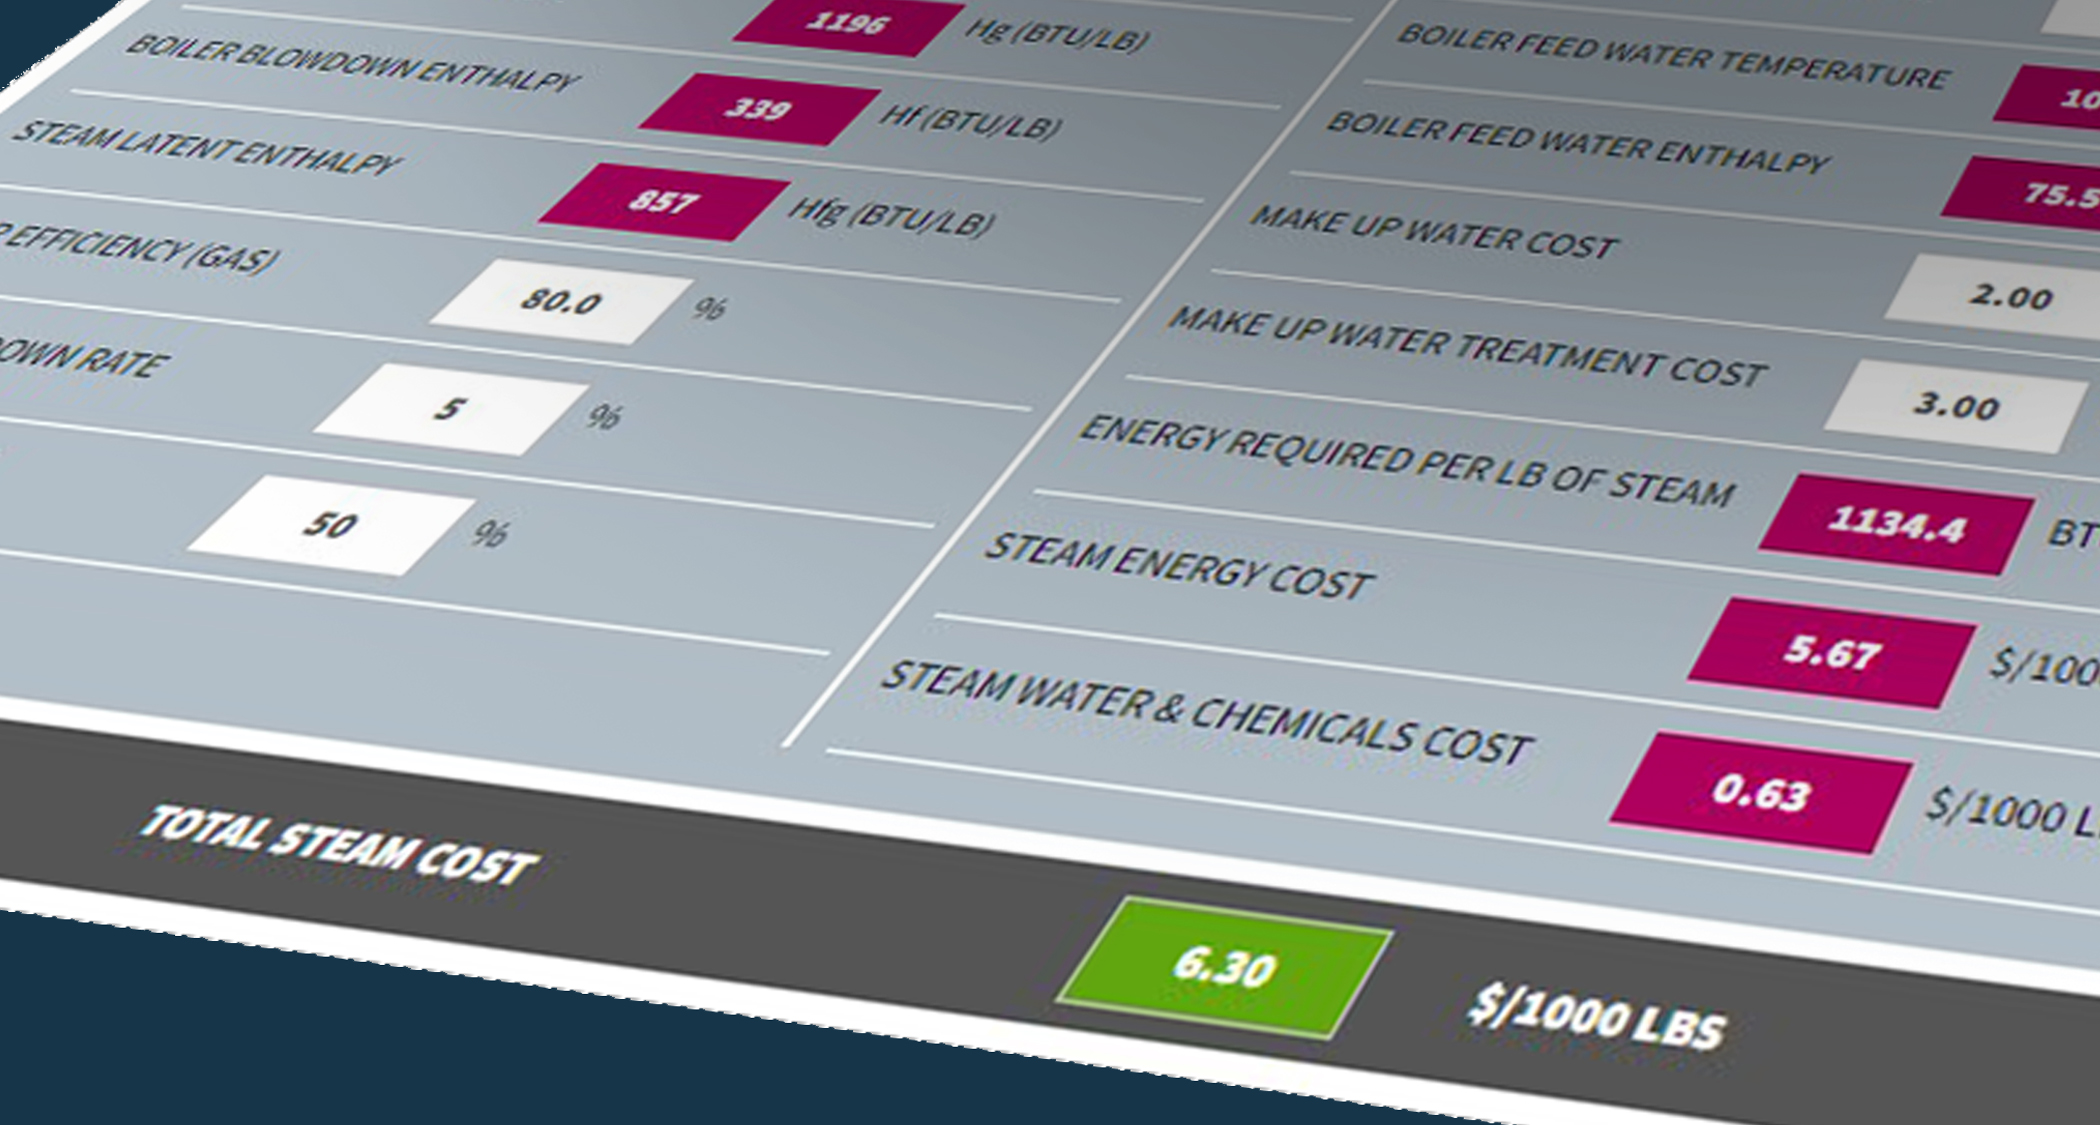 Illustrative stylized image of Steam Cost Calculator closeup